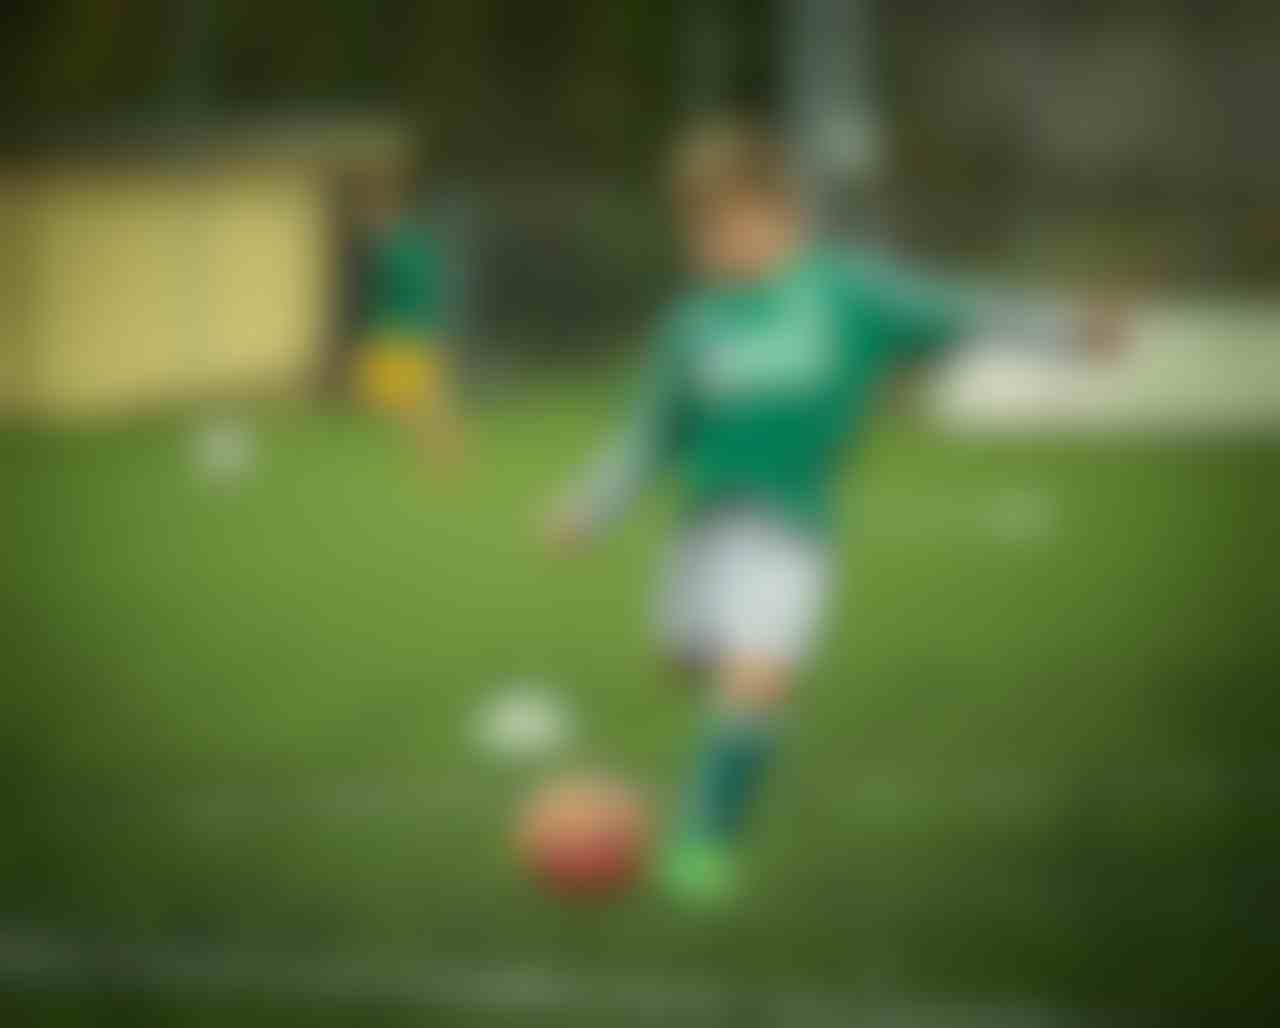 https://pixabay.com/nl/photos/kind-voetbal-spelen-trap-613199/